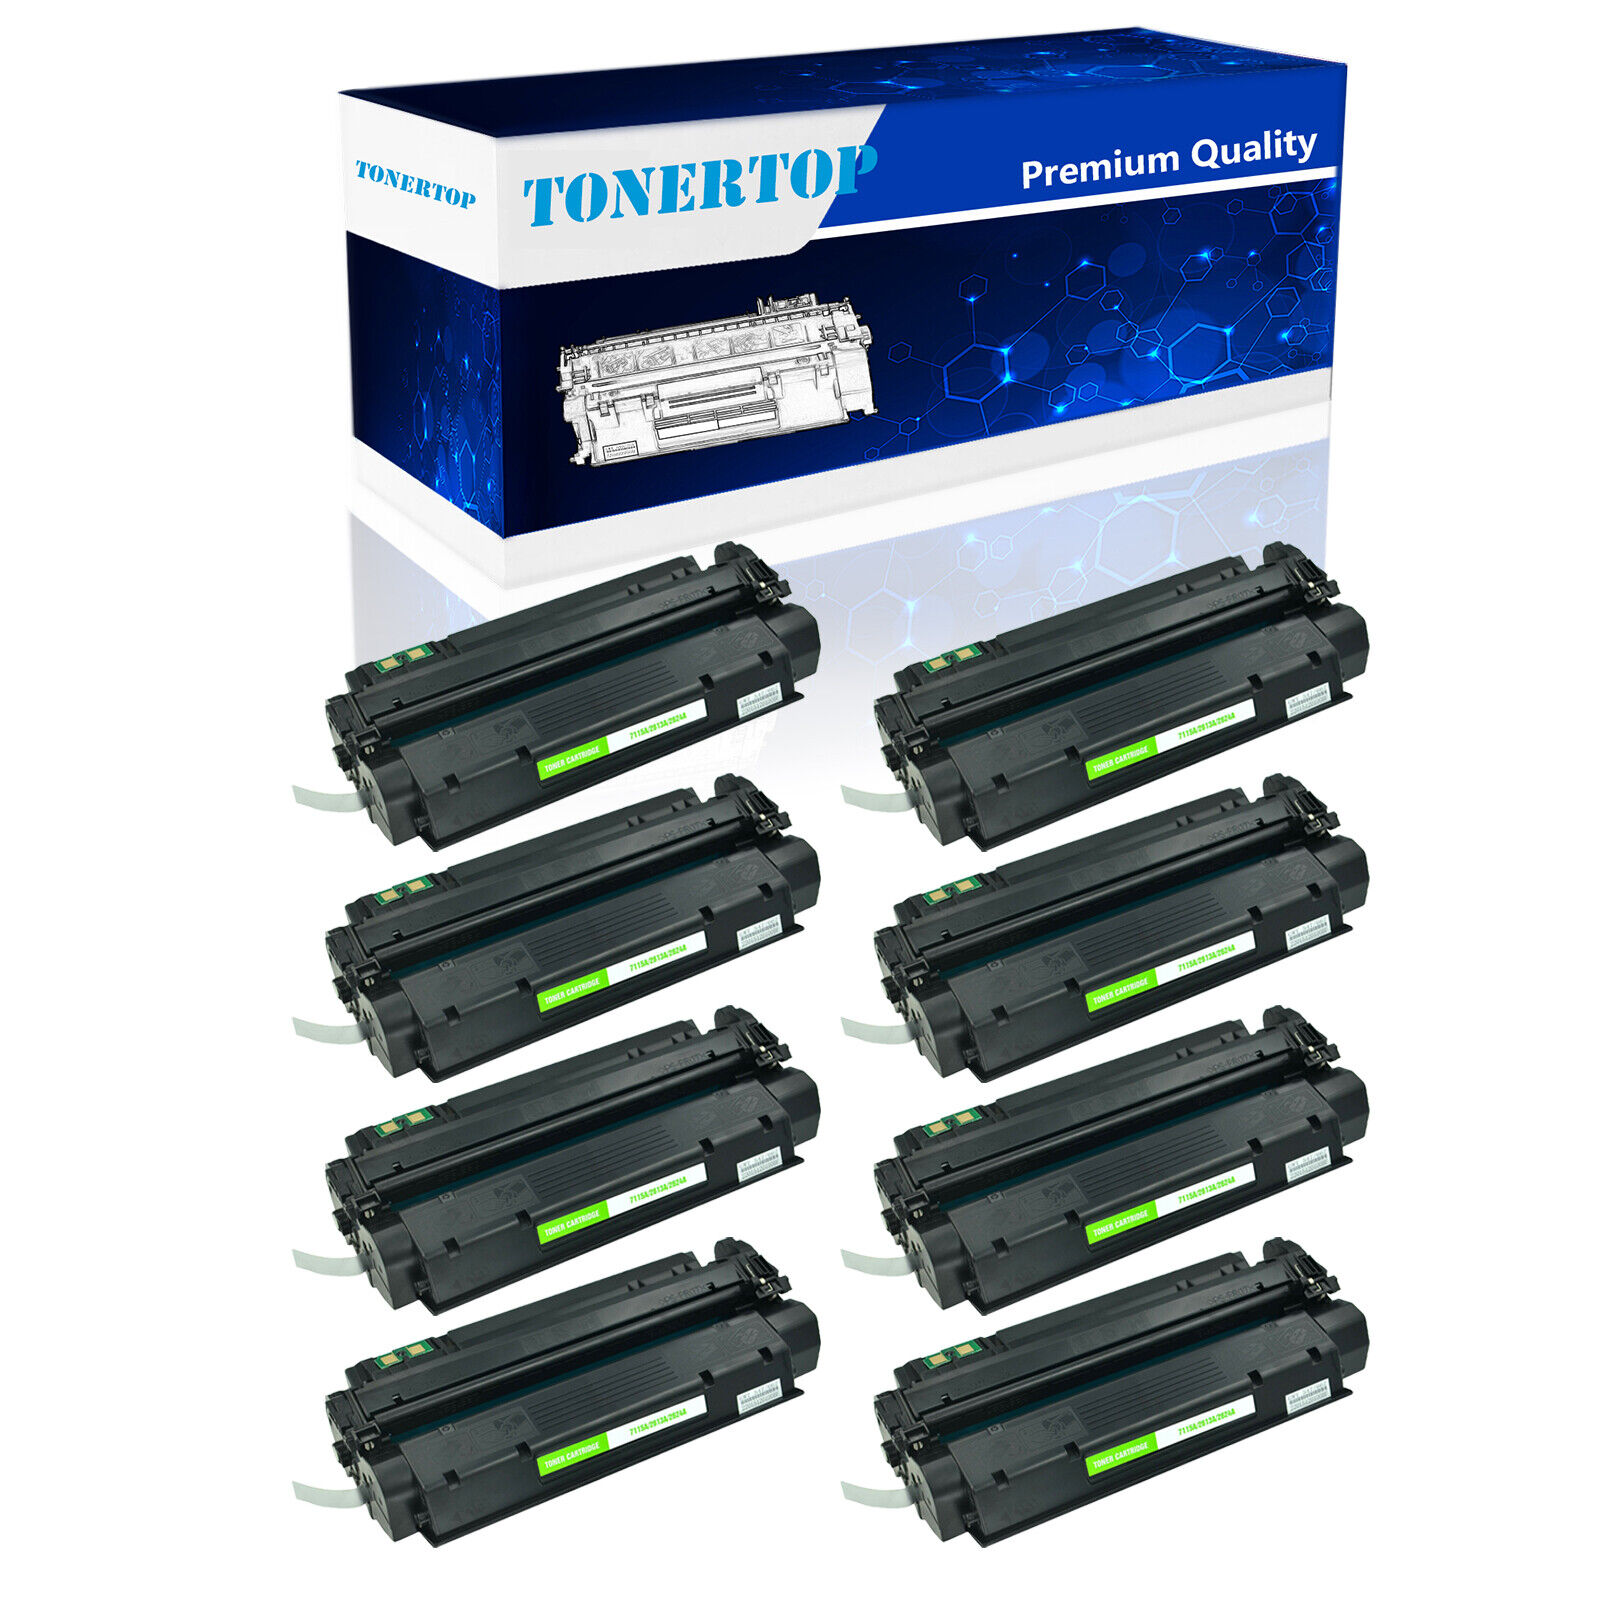 8PK C7115A Toner Cartridge Fits for HP LaserJet 1200 1200N 1200SE 3300 3310 MFP